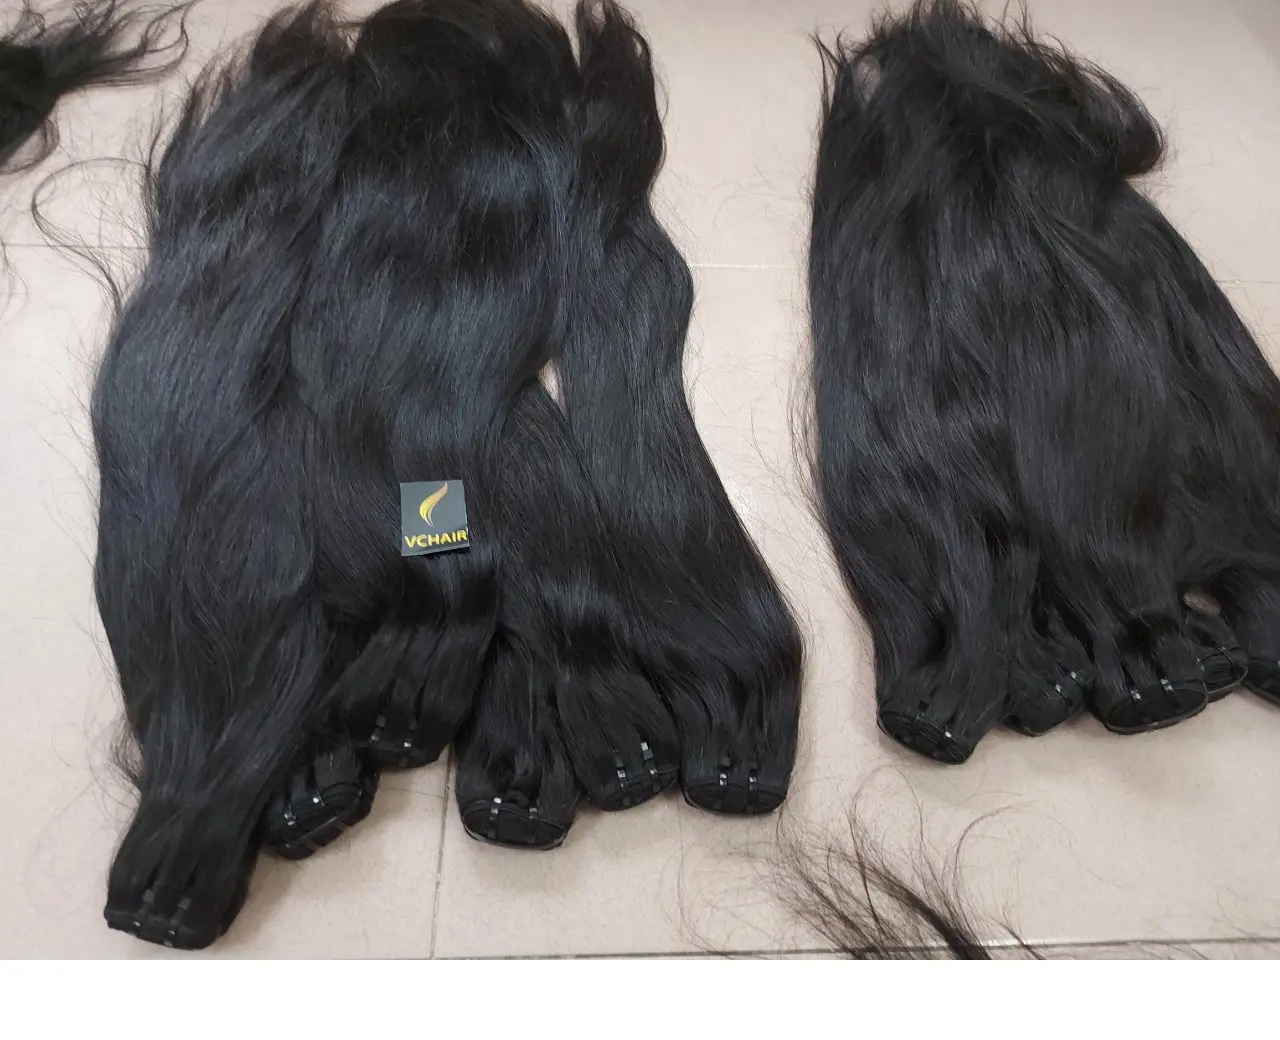 Natural straight raw virgin hair bundle extensions from 22in 24in 26in 28in 30in human hair Vietnamese